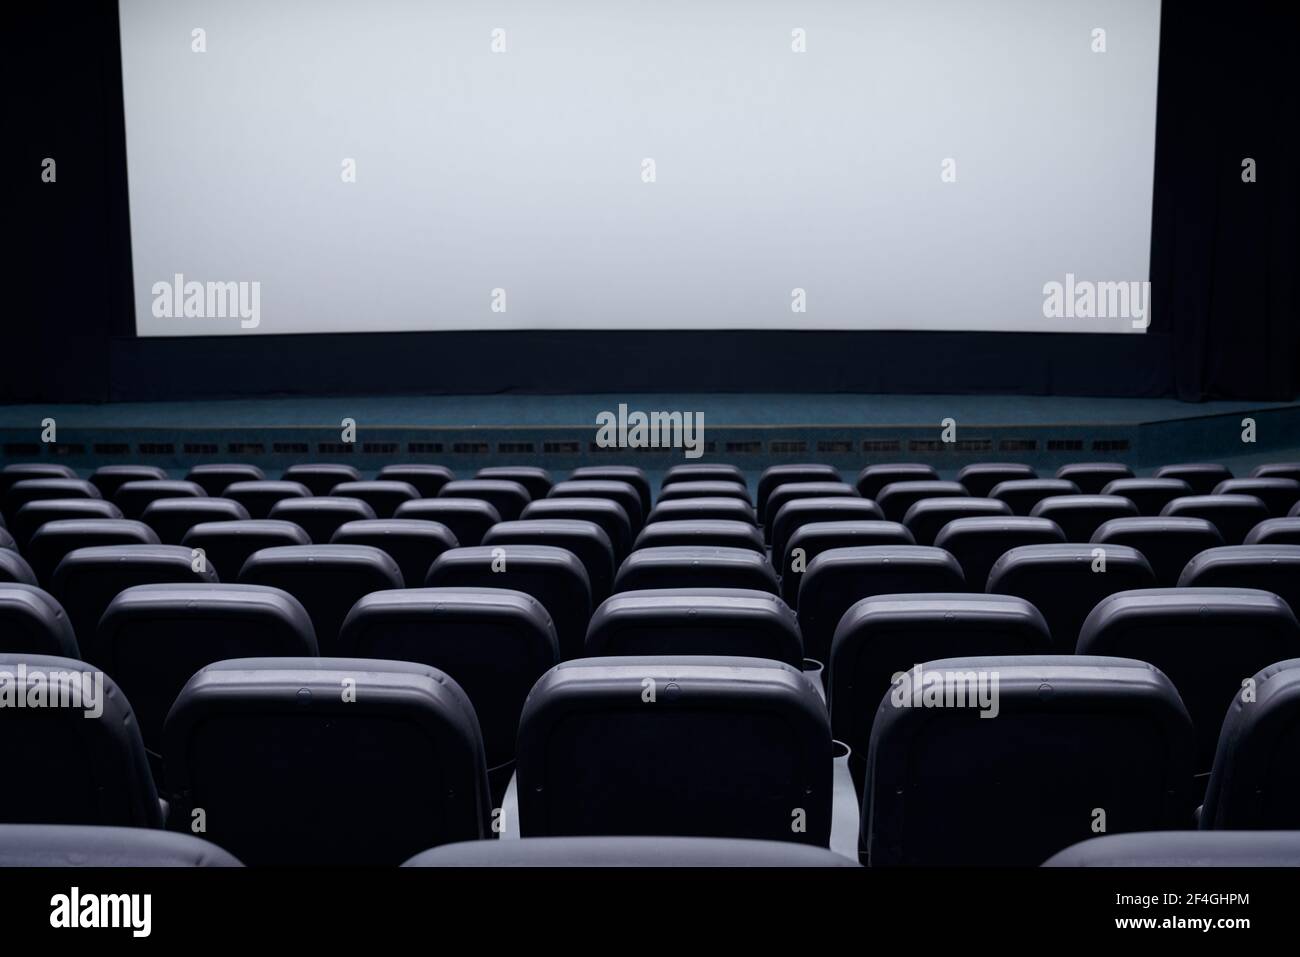 Cinema auditorium with black seats and white blank screen. Concept of interior cinema hall. Stock Photo